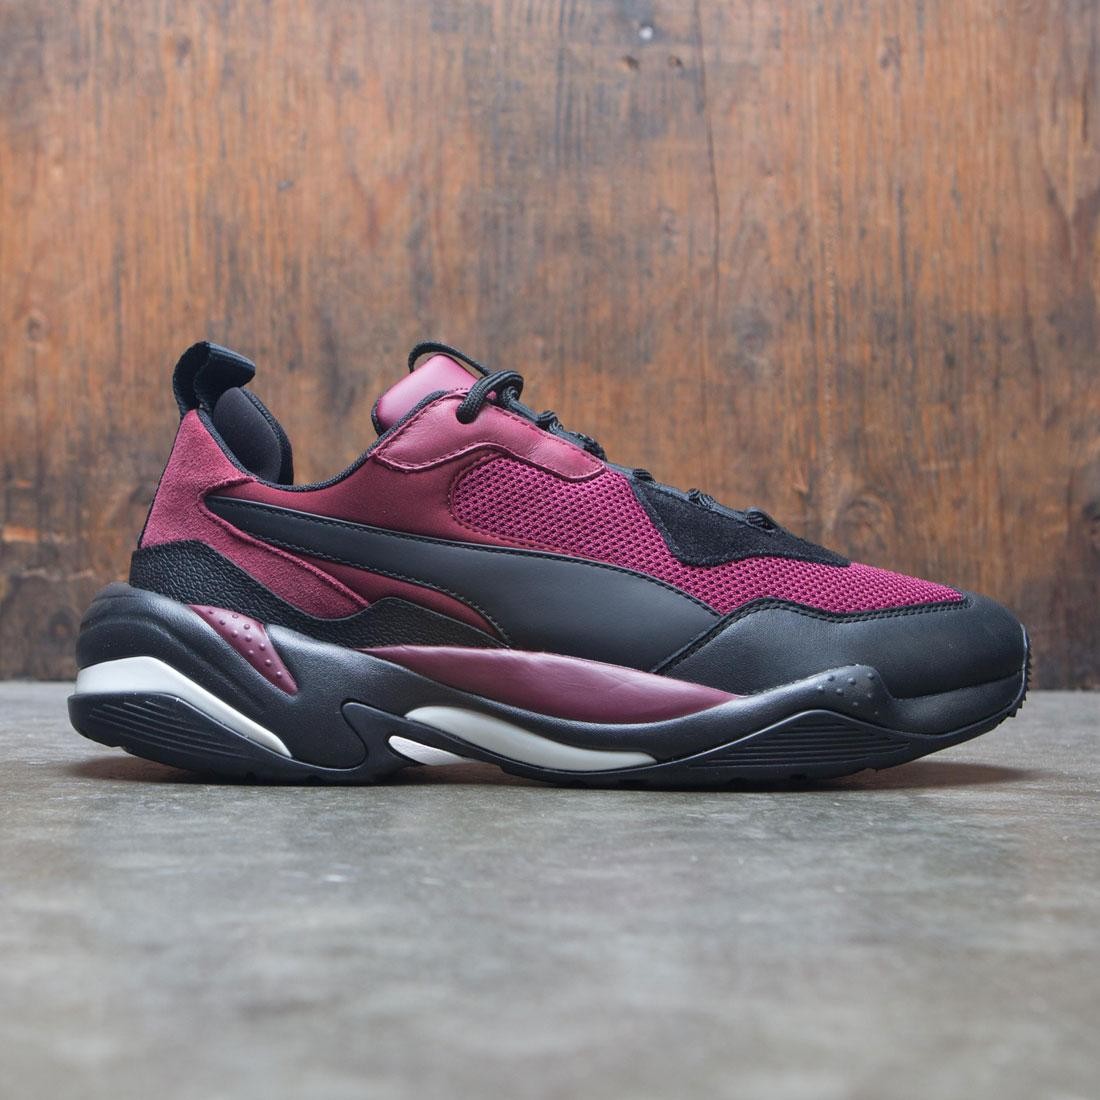 puma sneakers burgundy